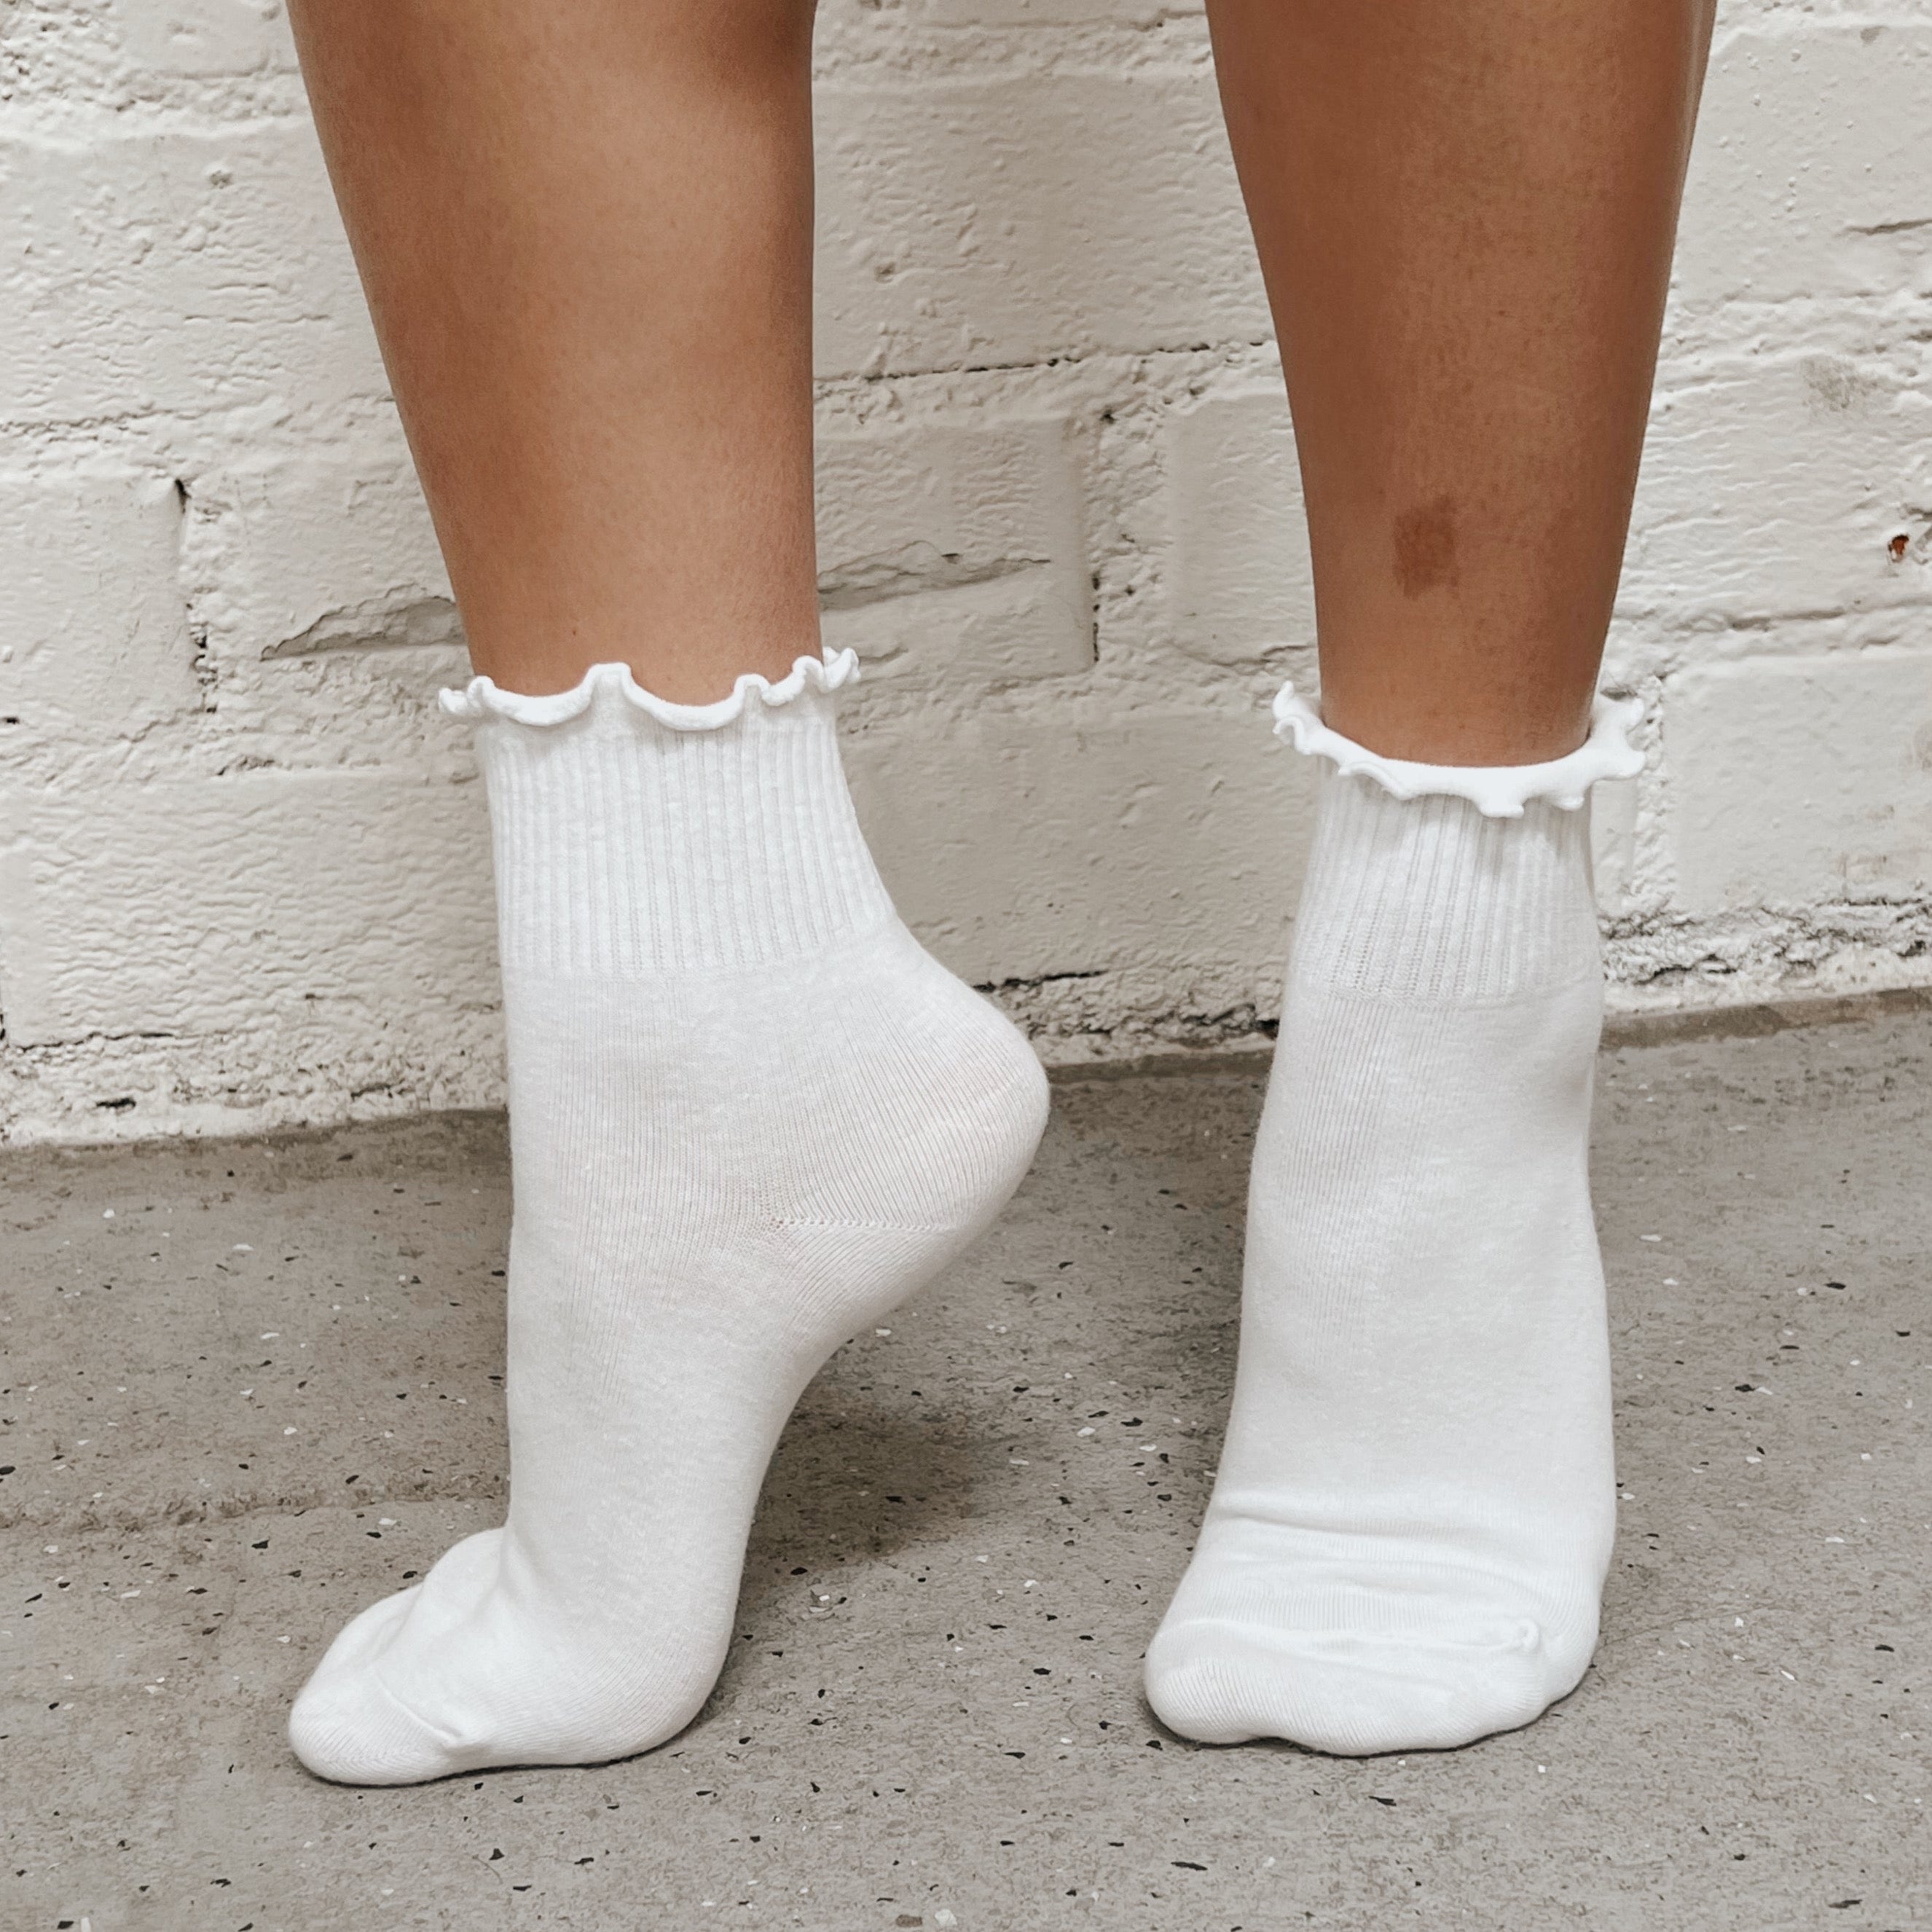 Girl wearing white ruffle socks